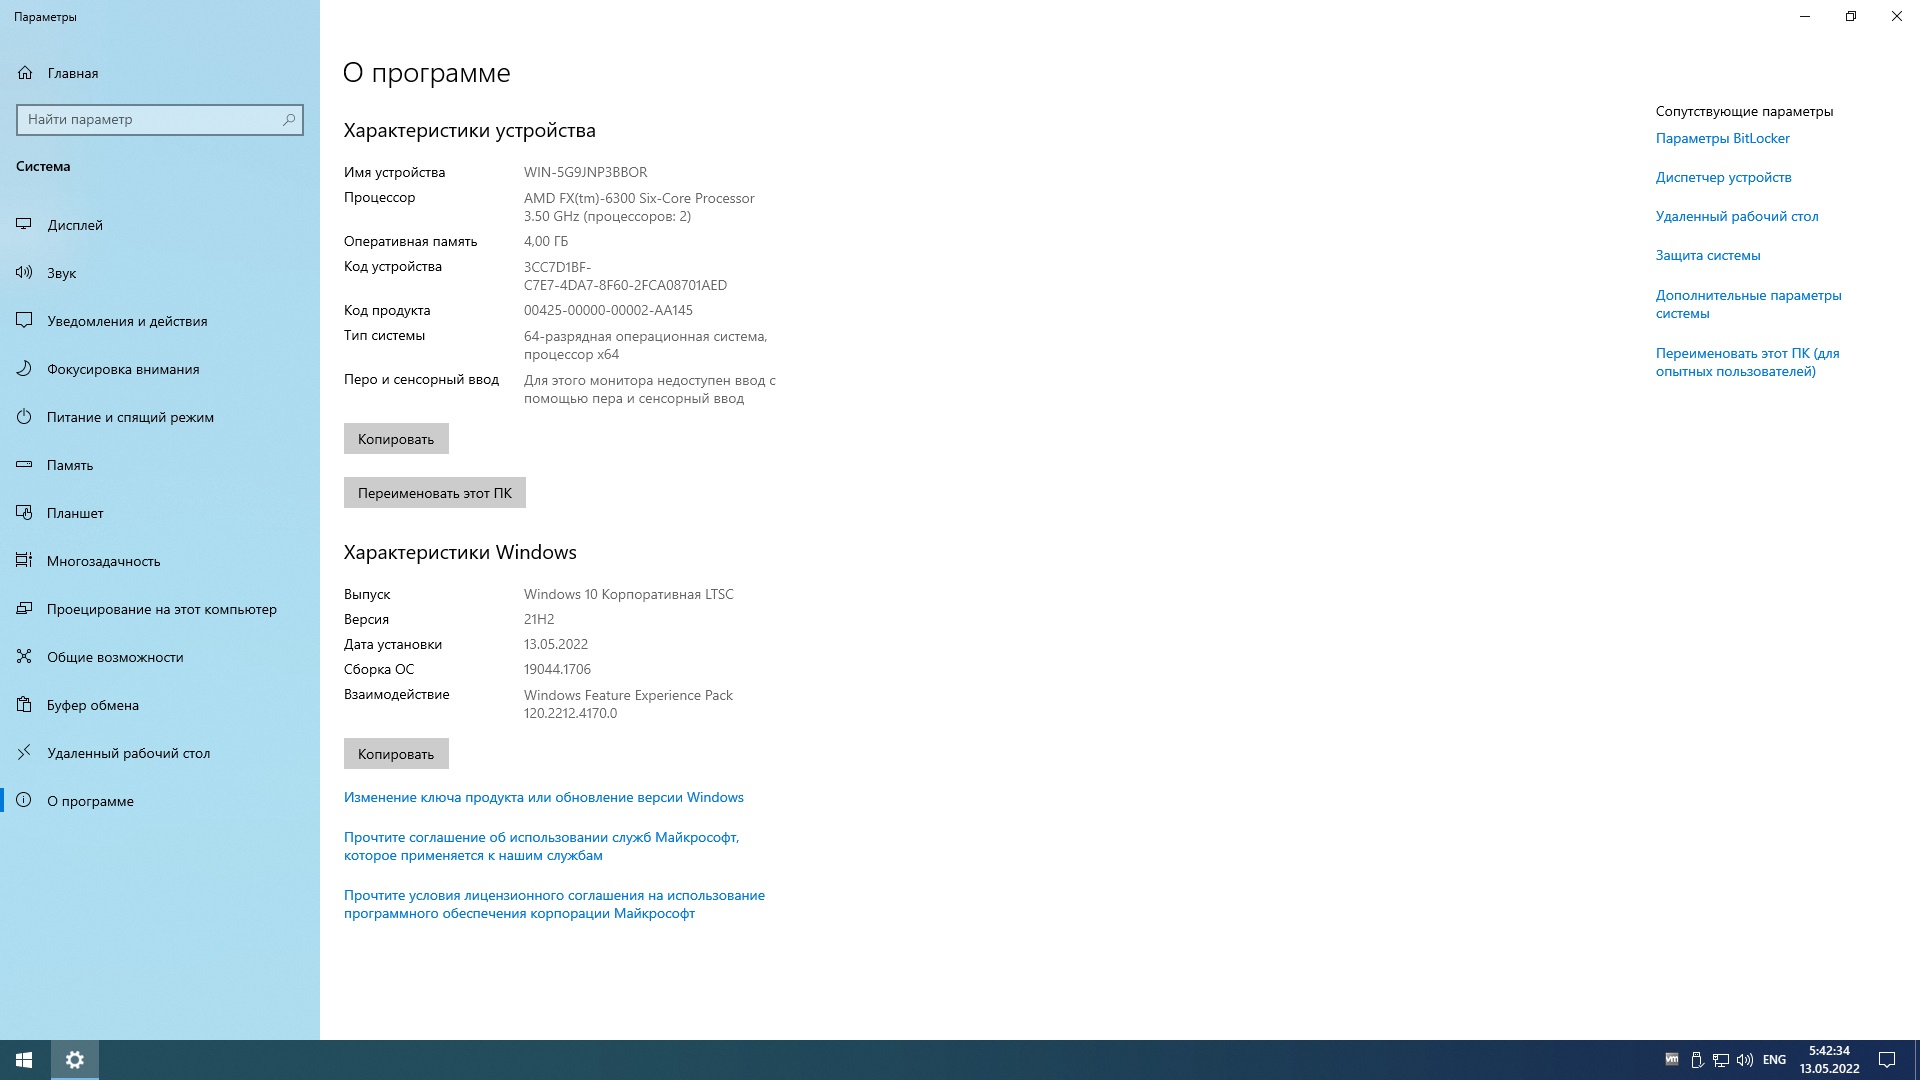 Windows 10 Enterprise LTSC x64 Rus by OneSmiLe [19044.1706]